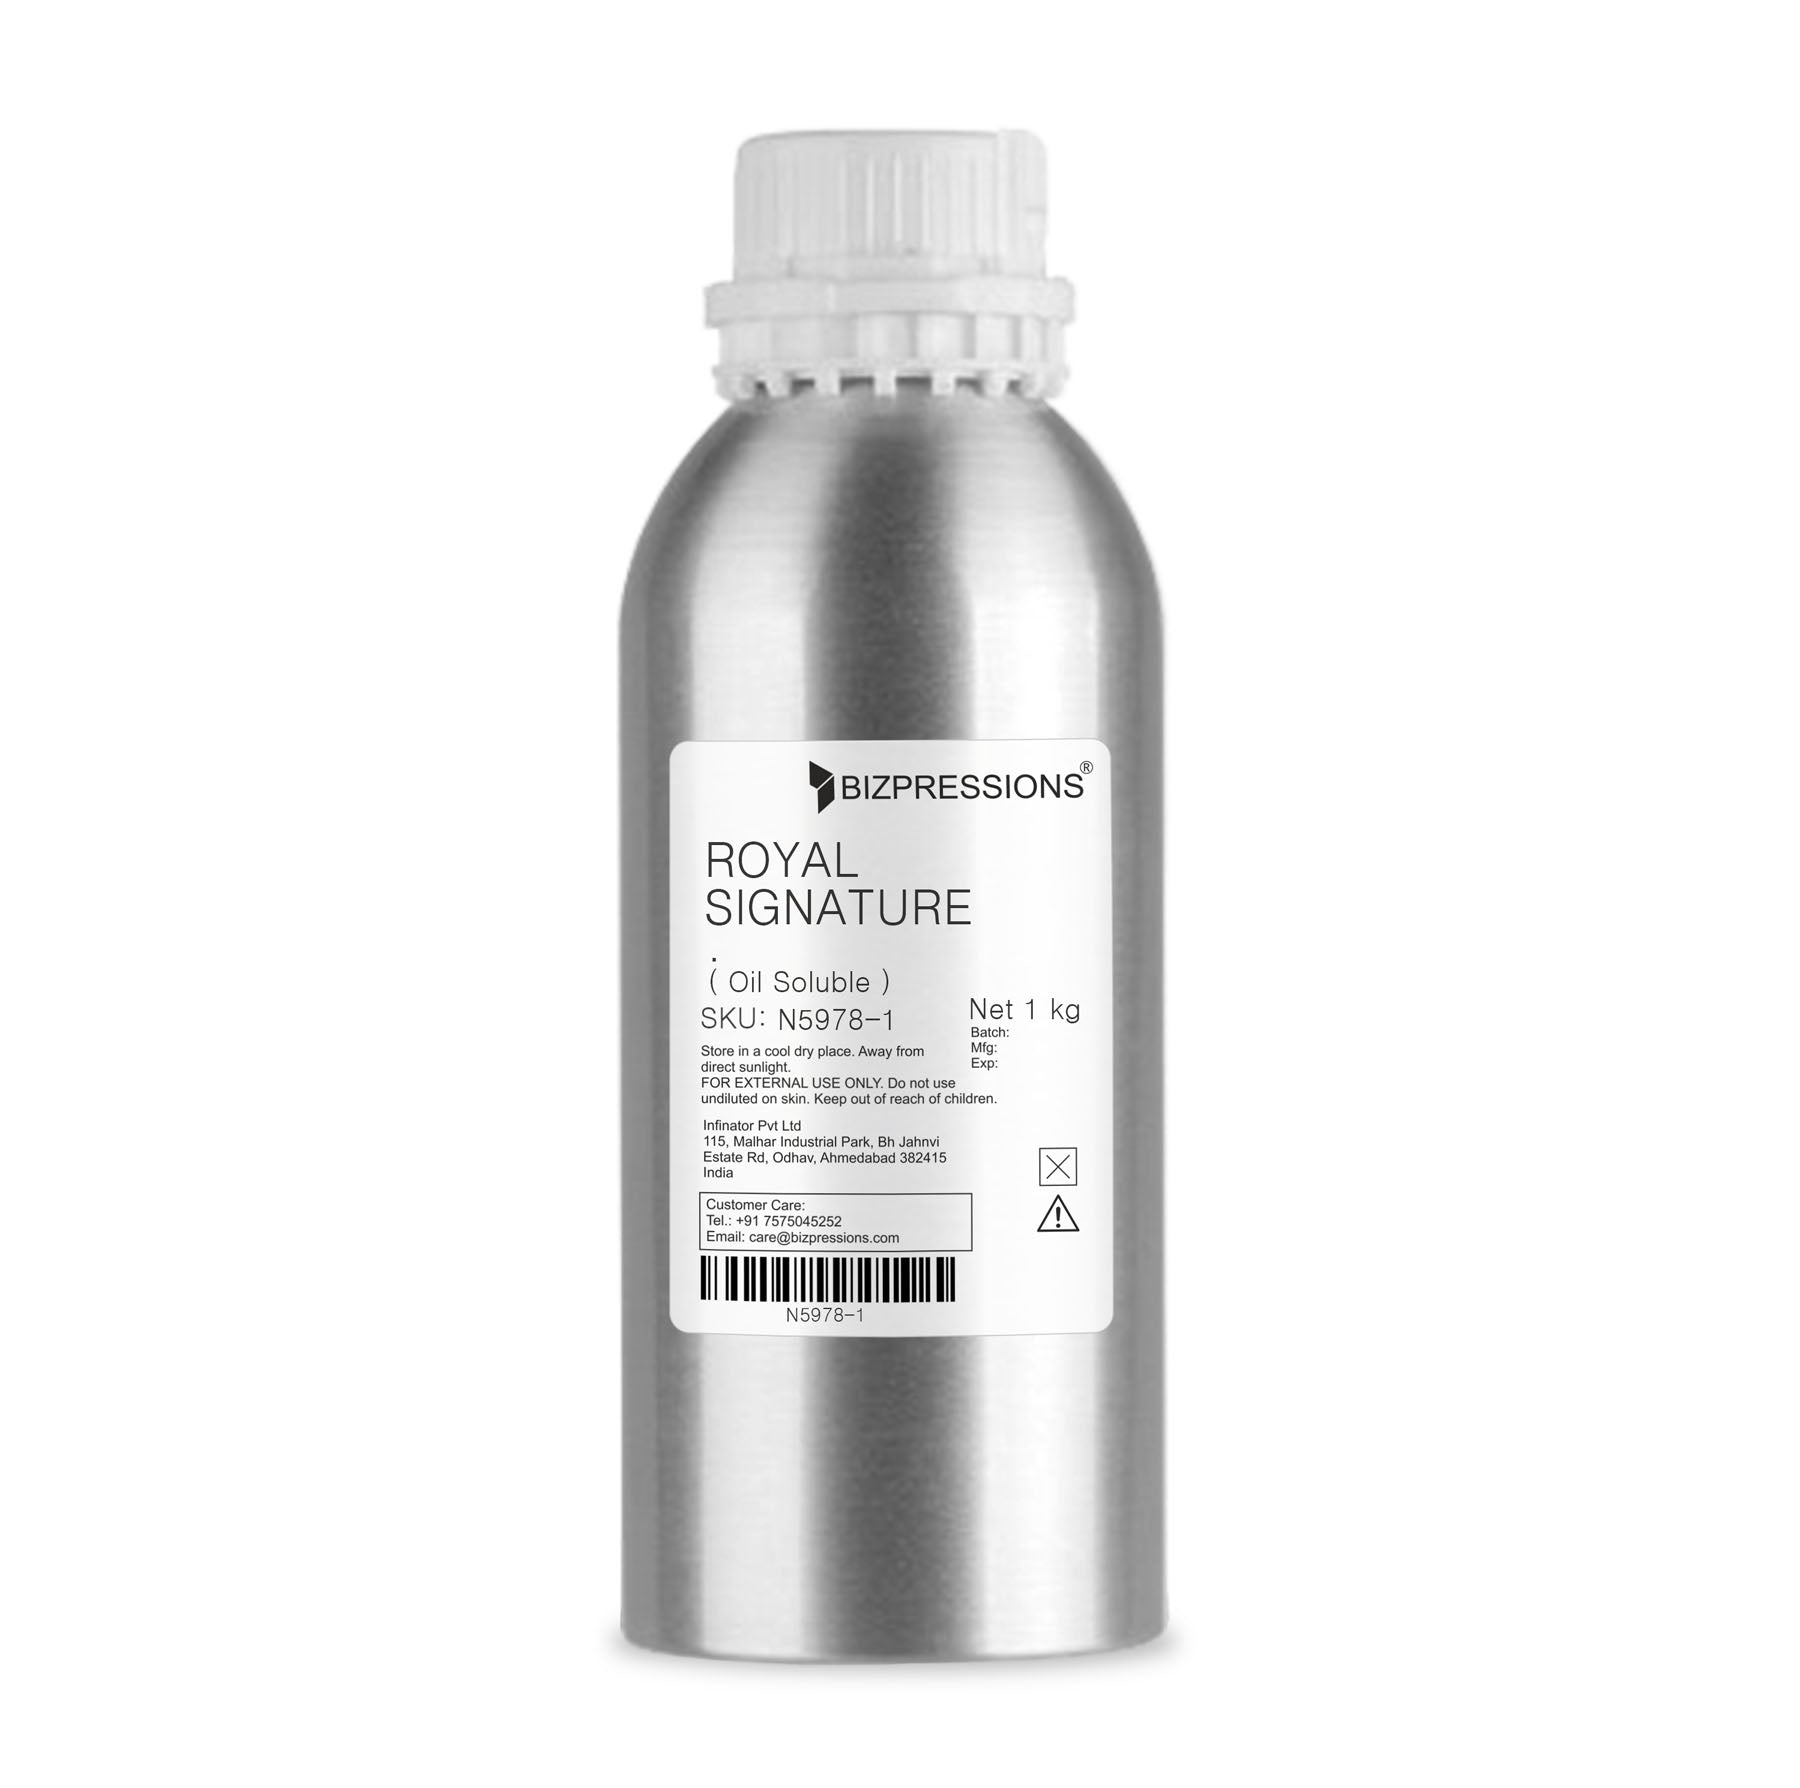 ROYAL SIGNATURE - Fragrance ( Oil Soluble ) - 1 kg